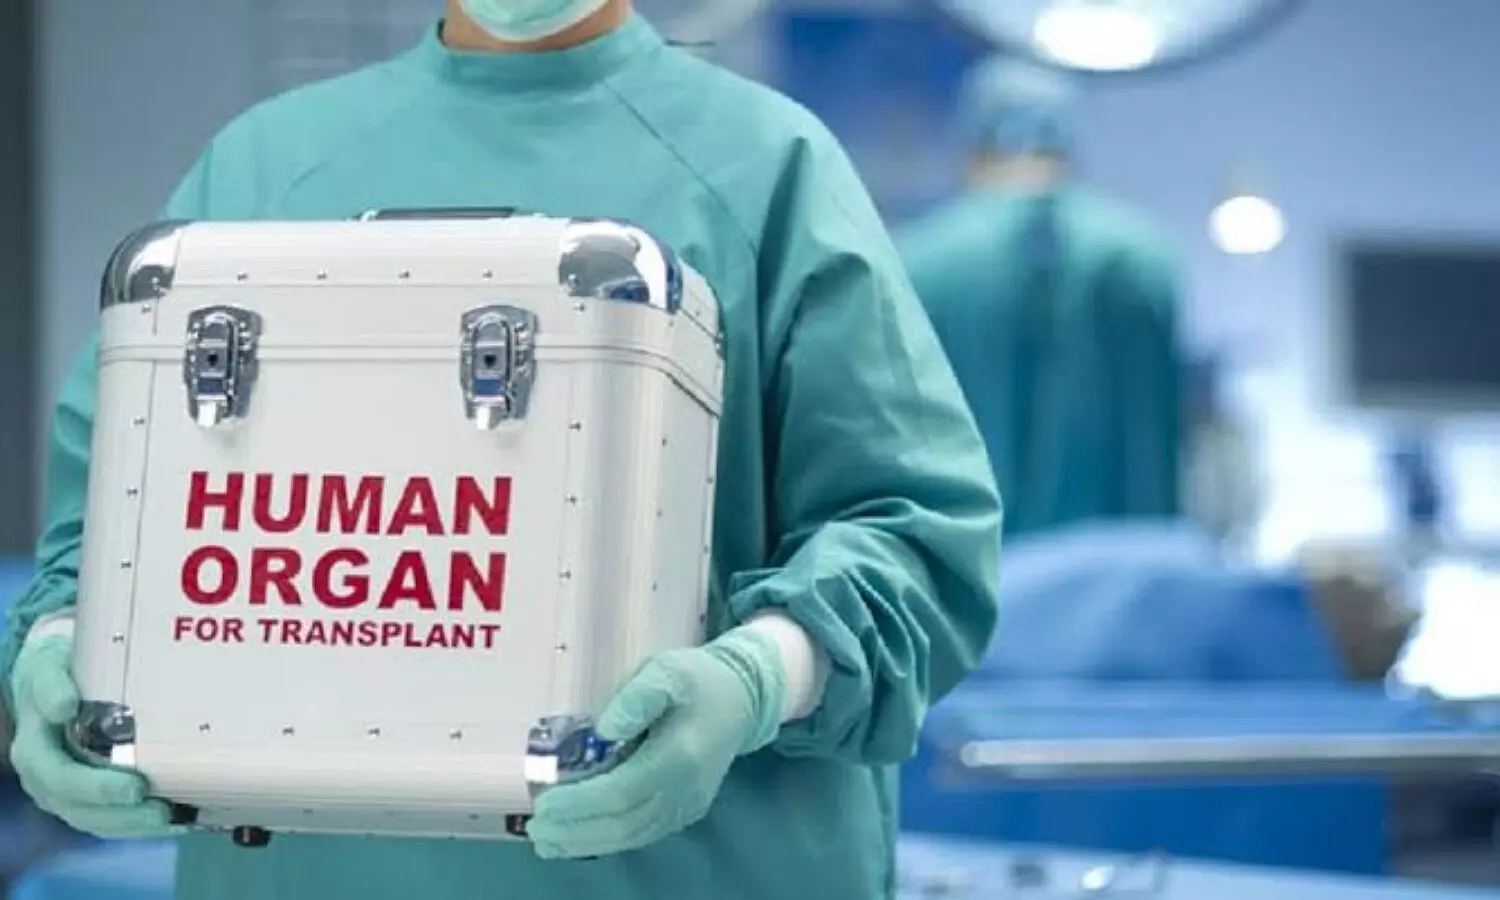 Human organ transplant